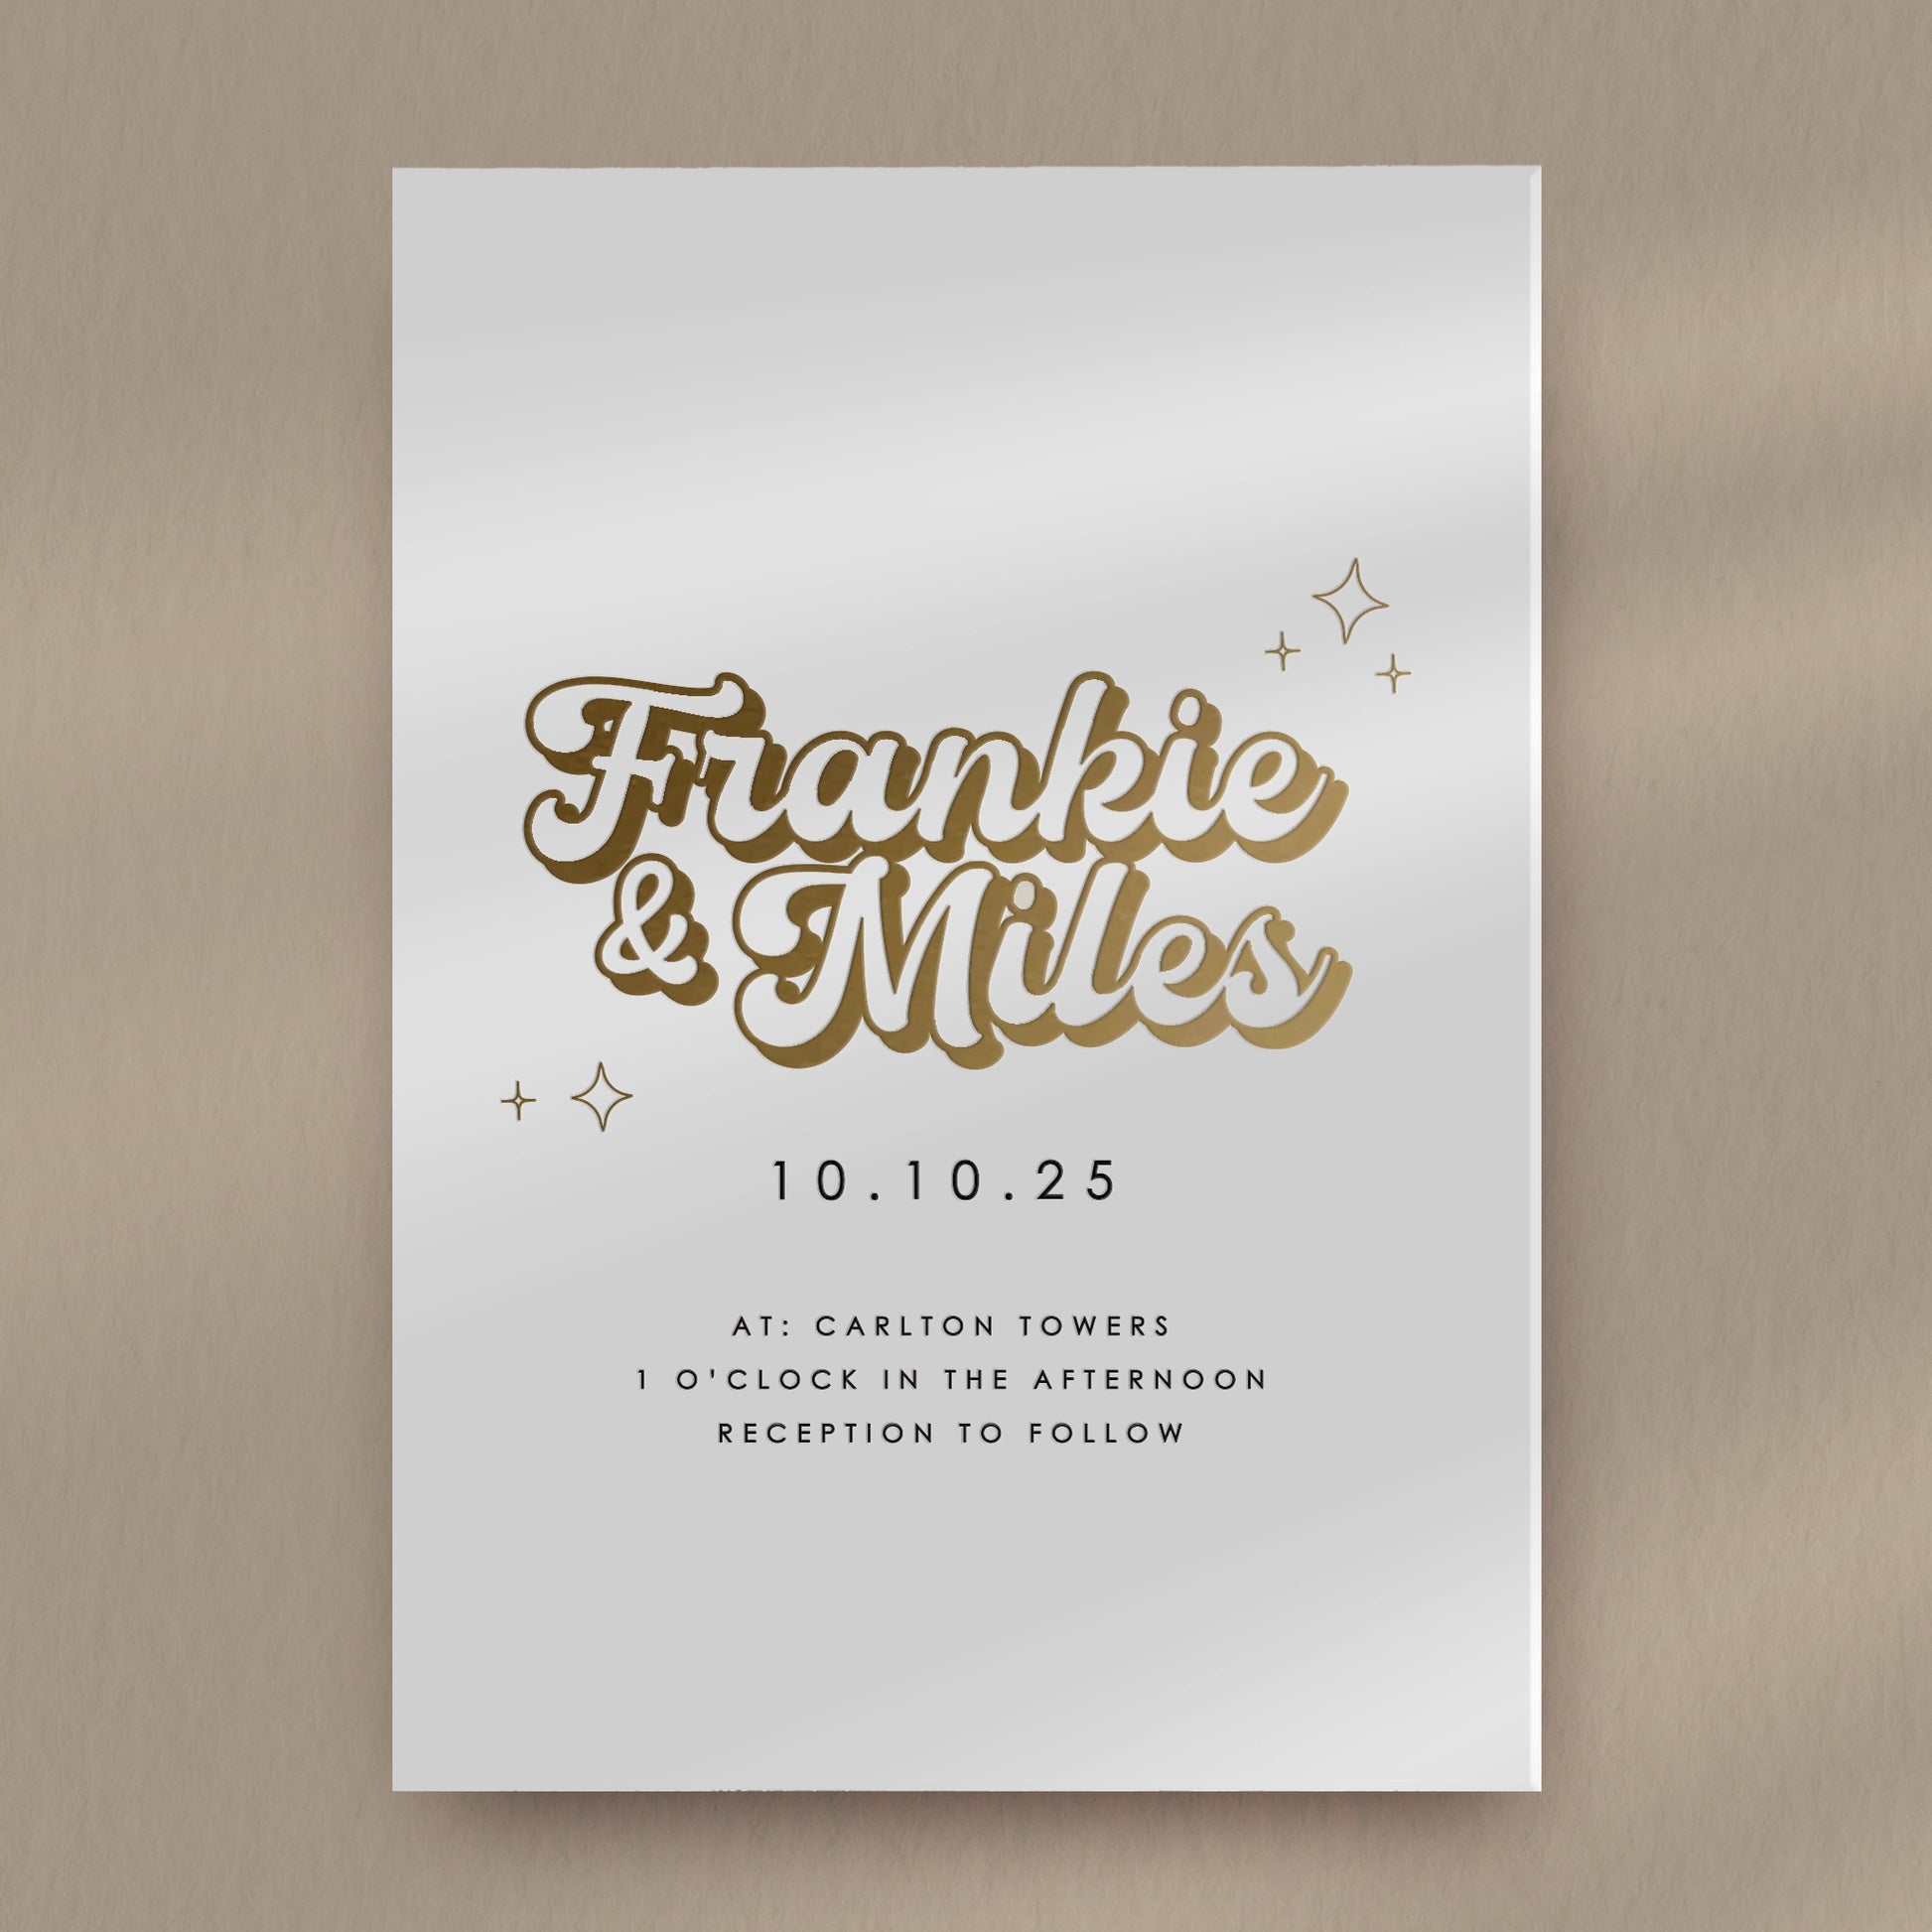 Day Invitation Sample  Ivy and Gold Wedding Stationery Frankie  